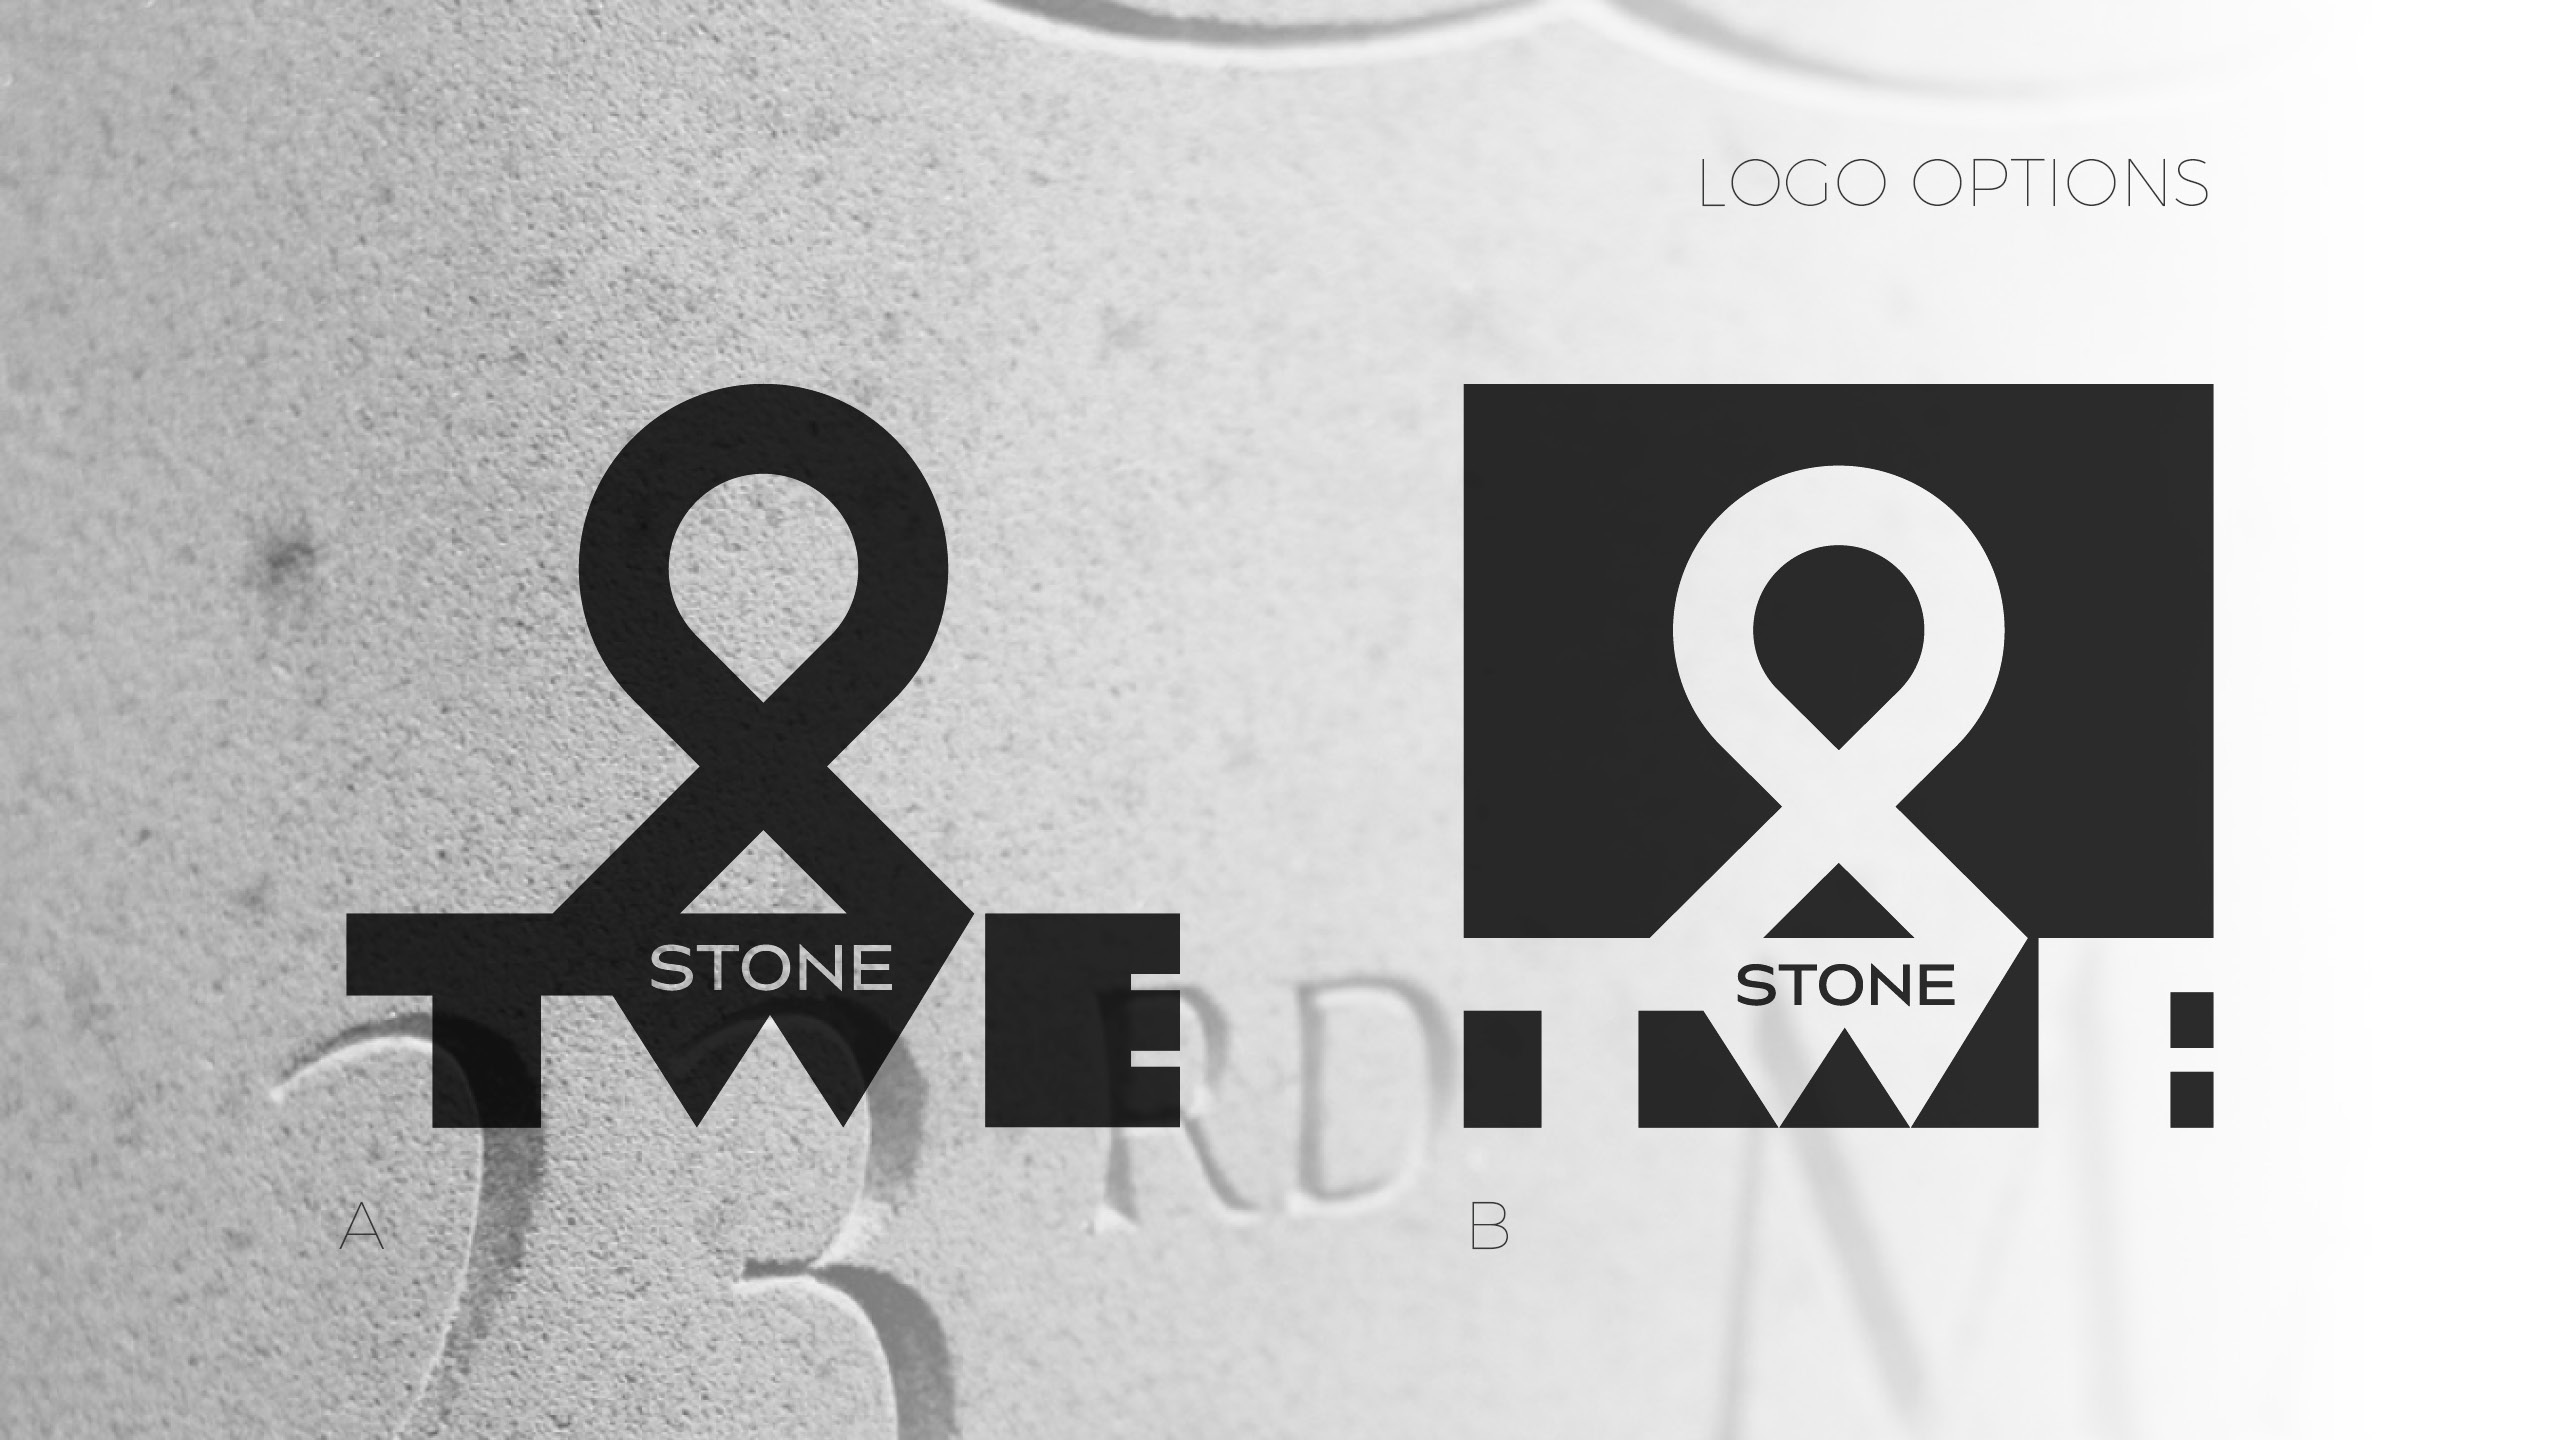 TWE Stone Logobou Design 03